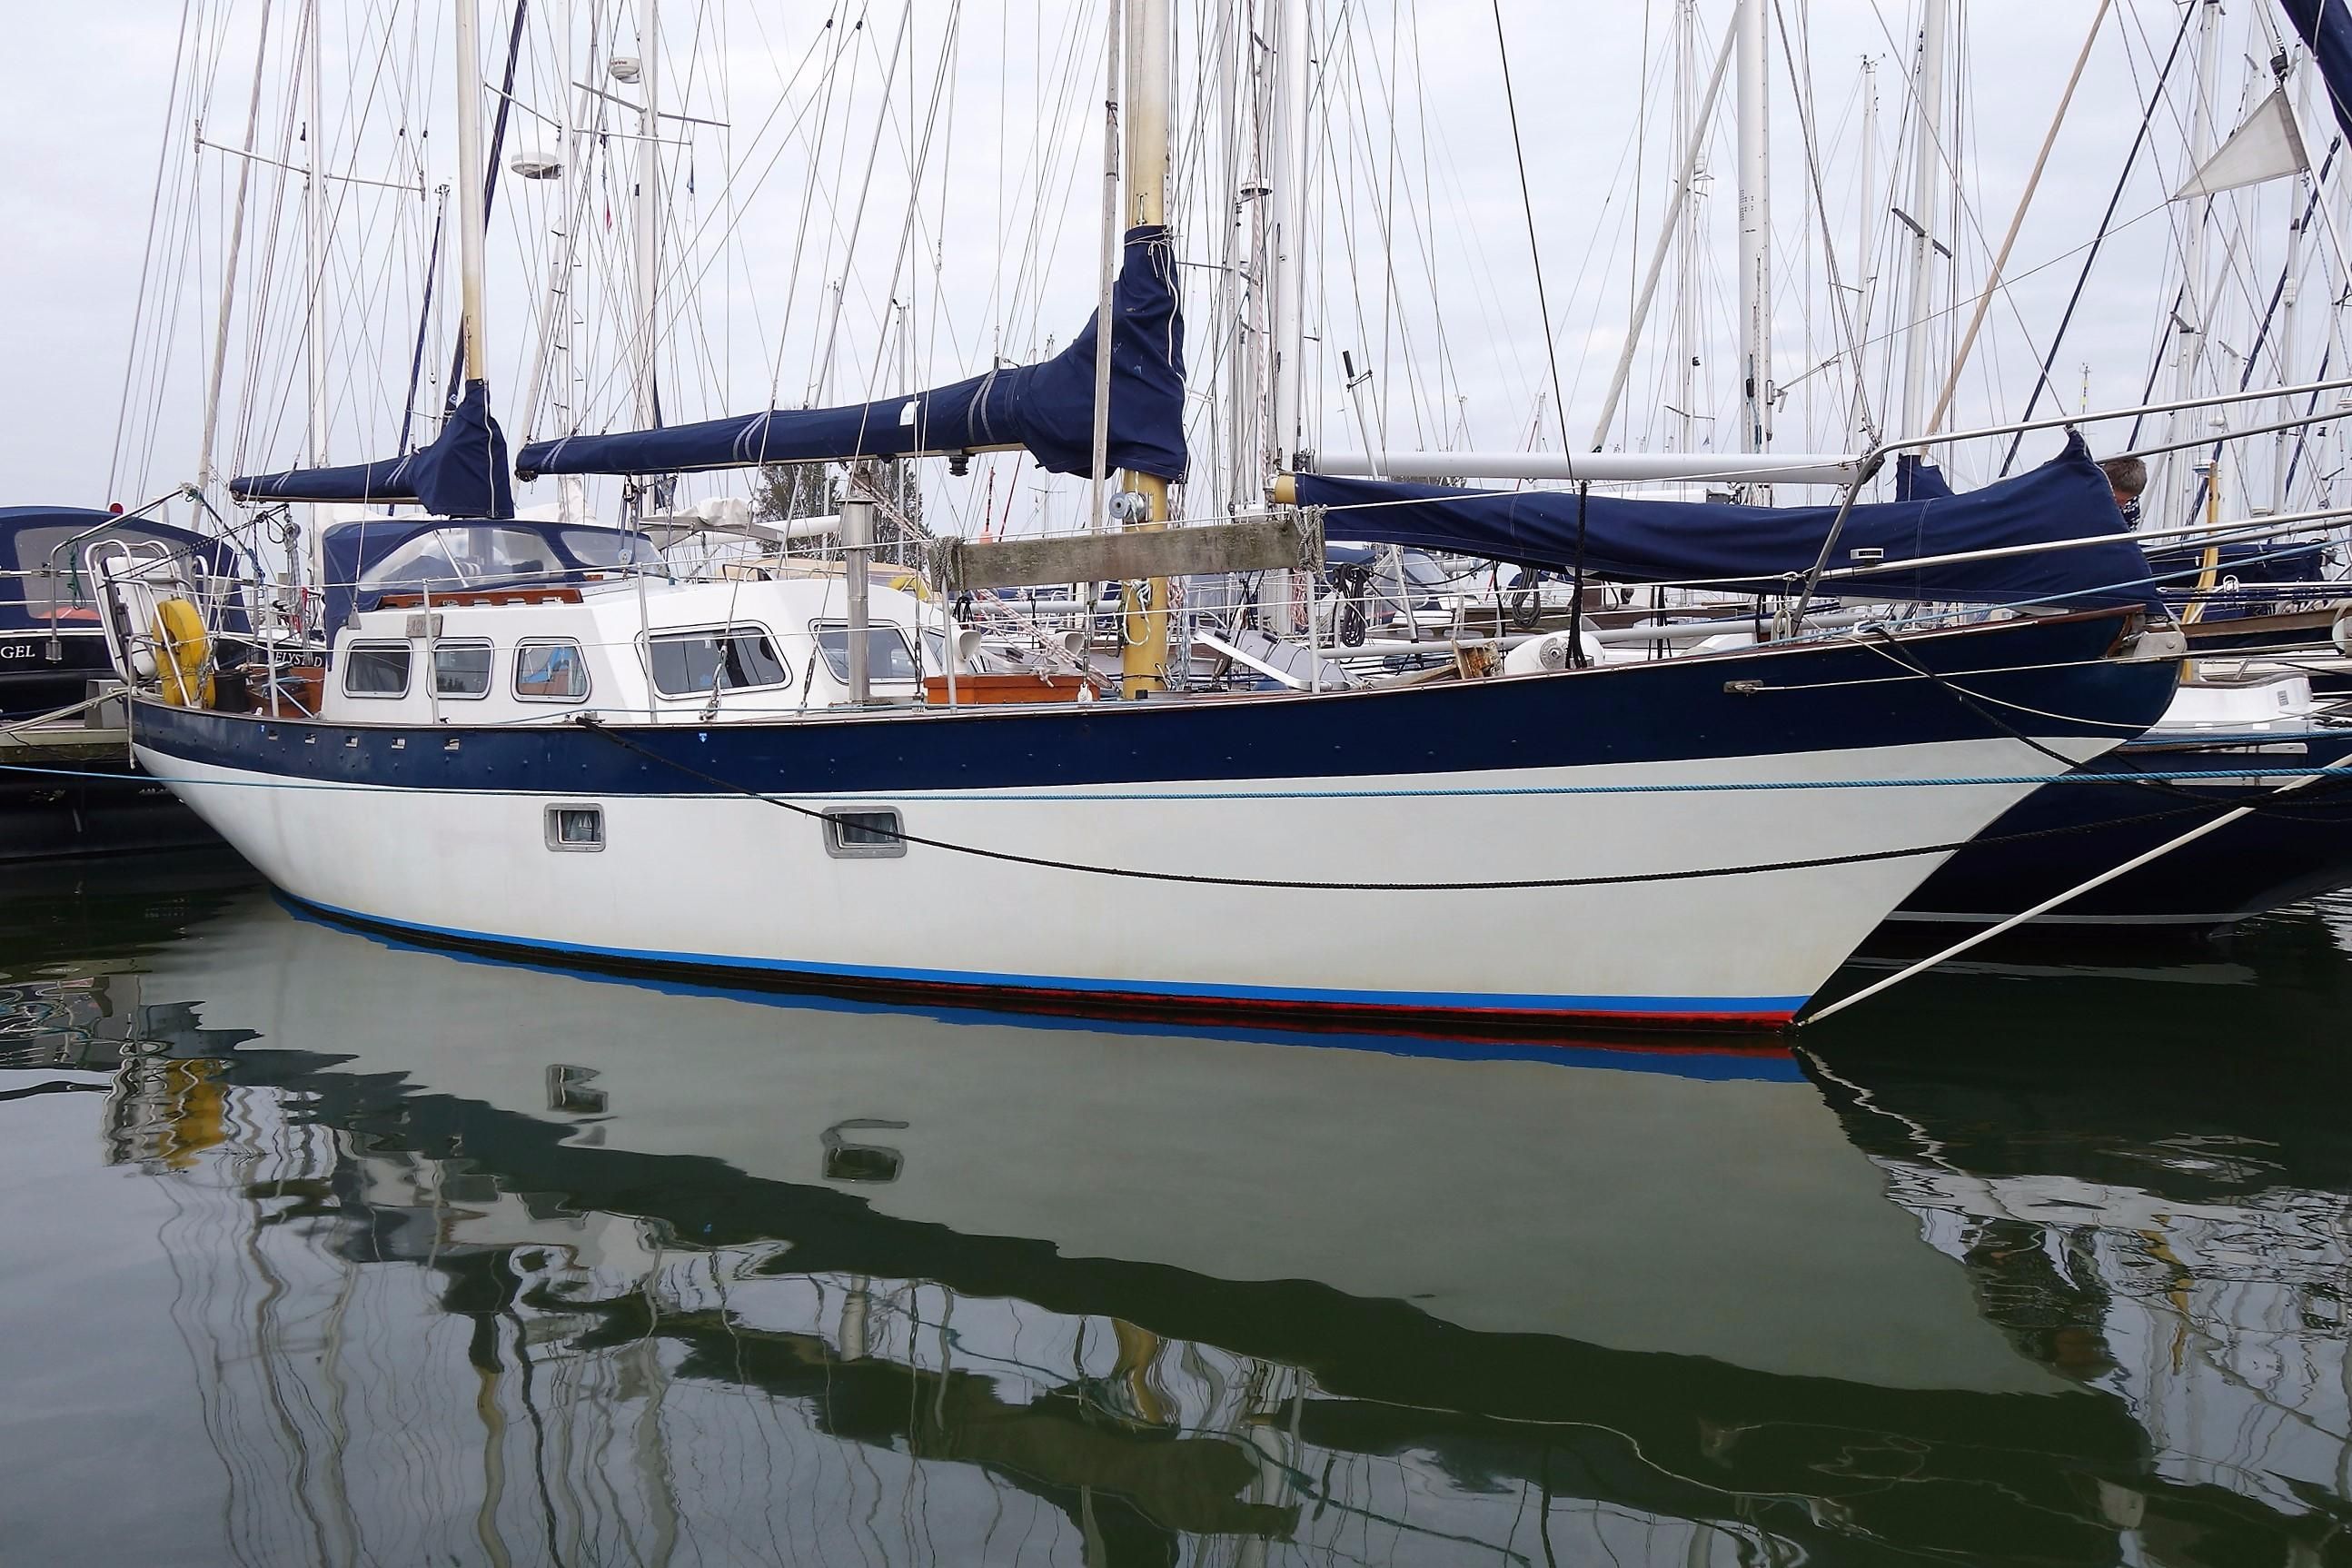 35ft sailboat for sale uk